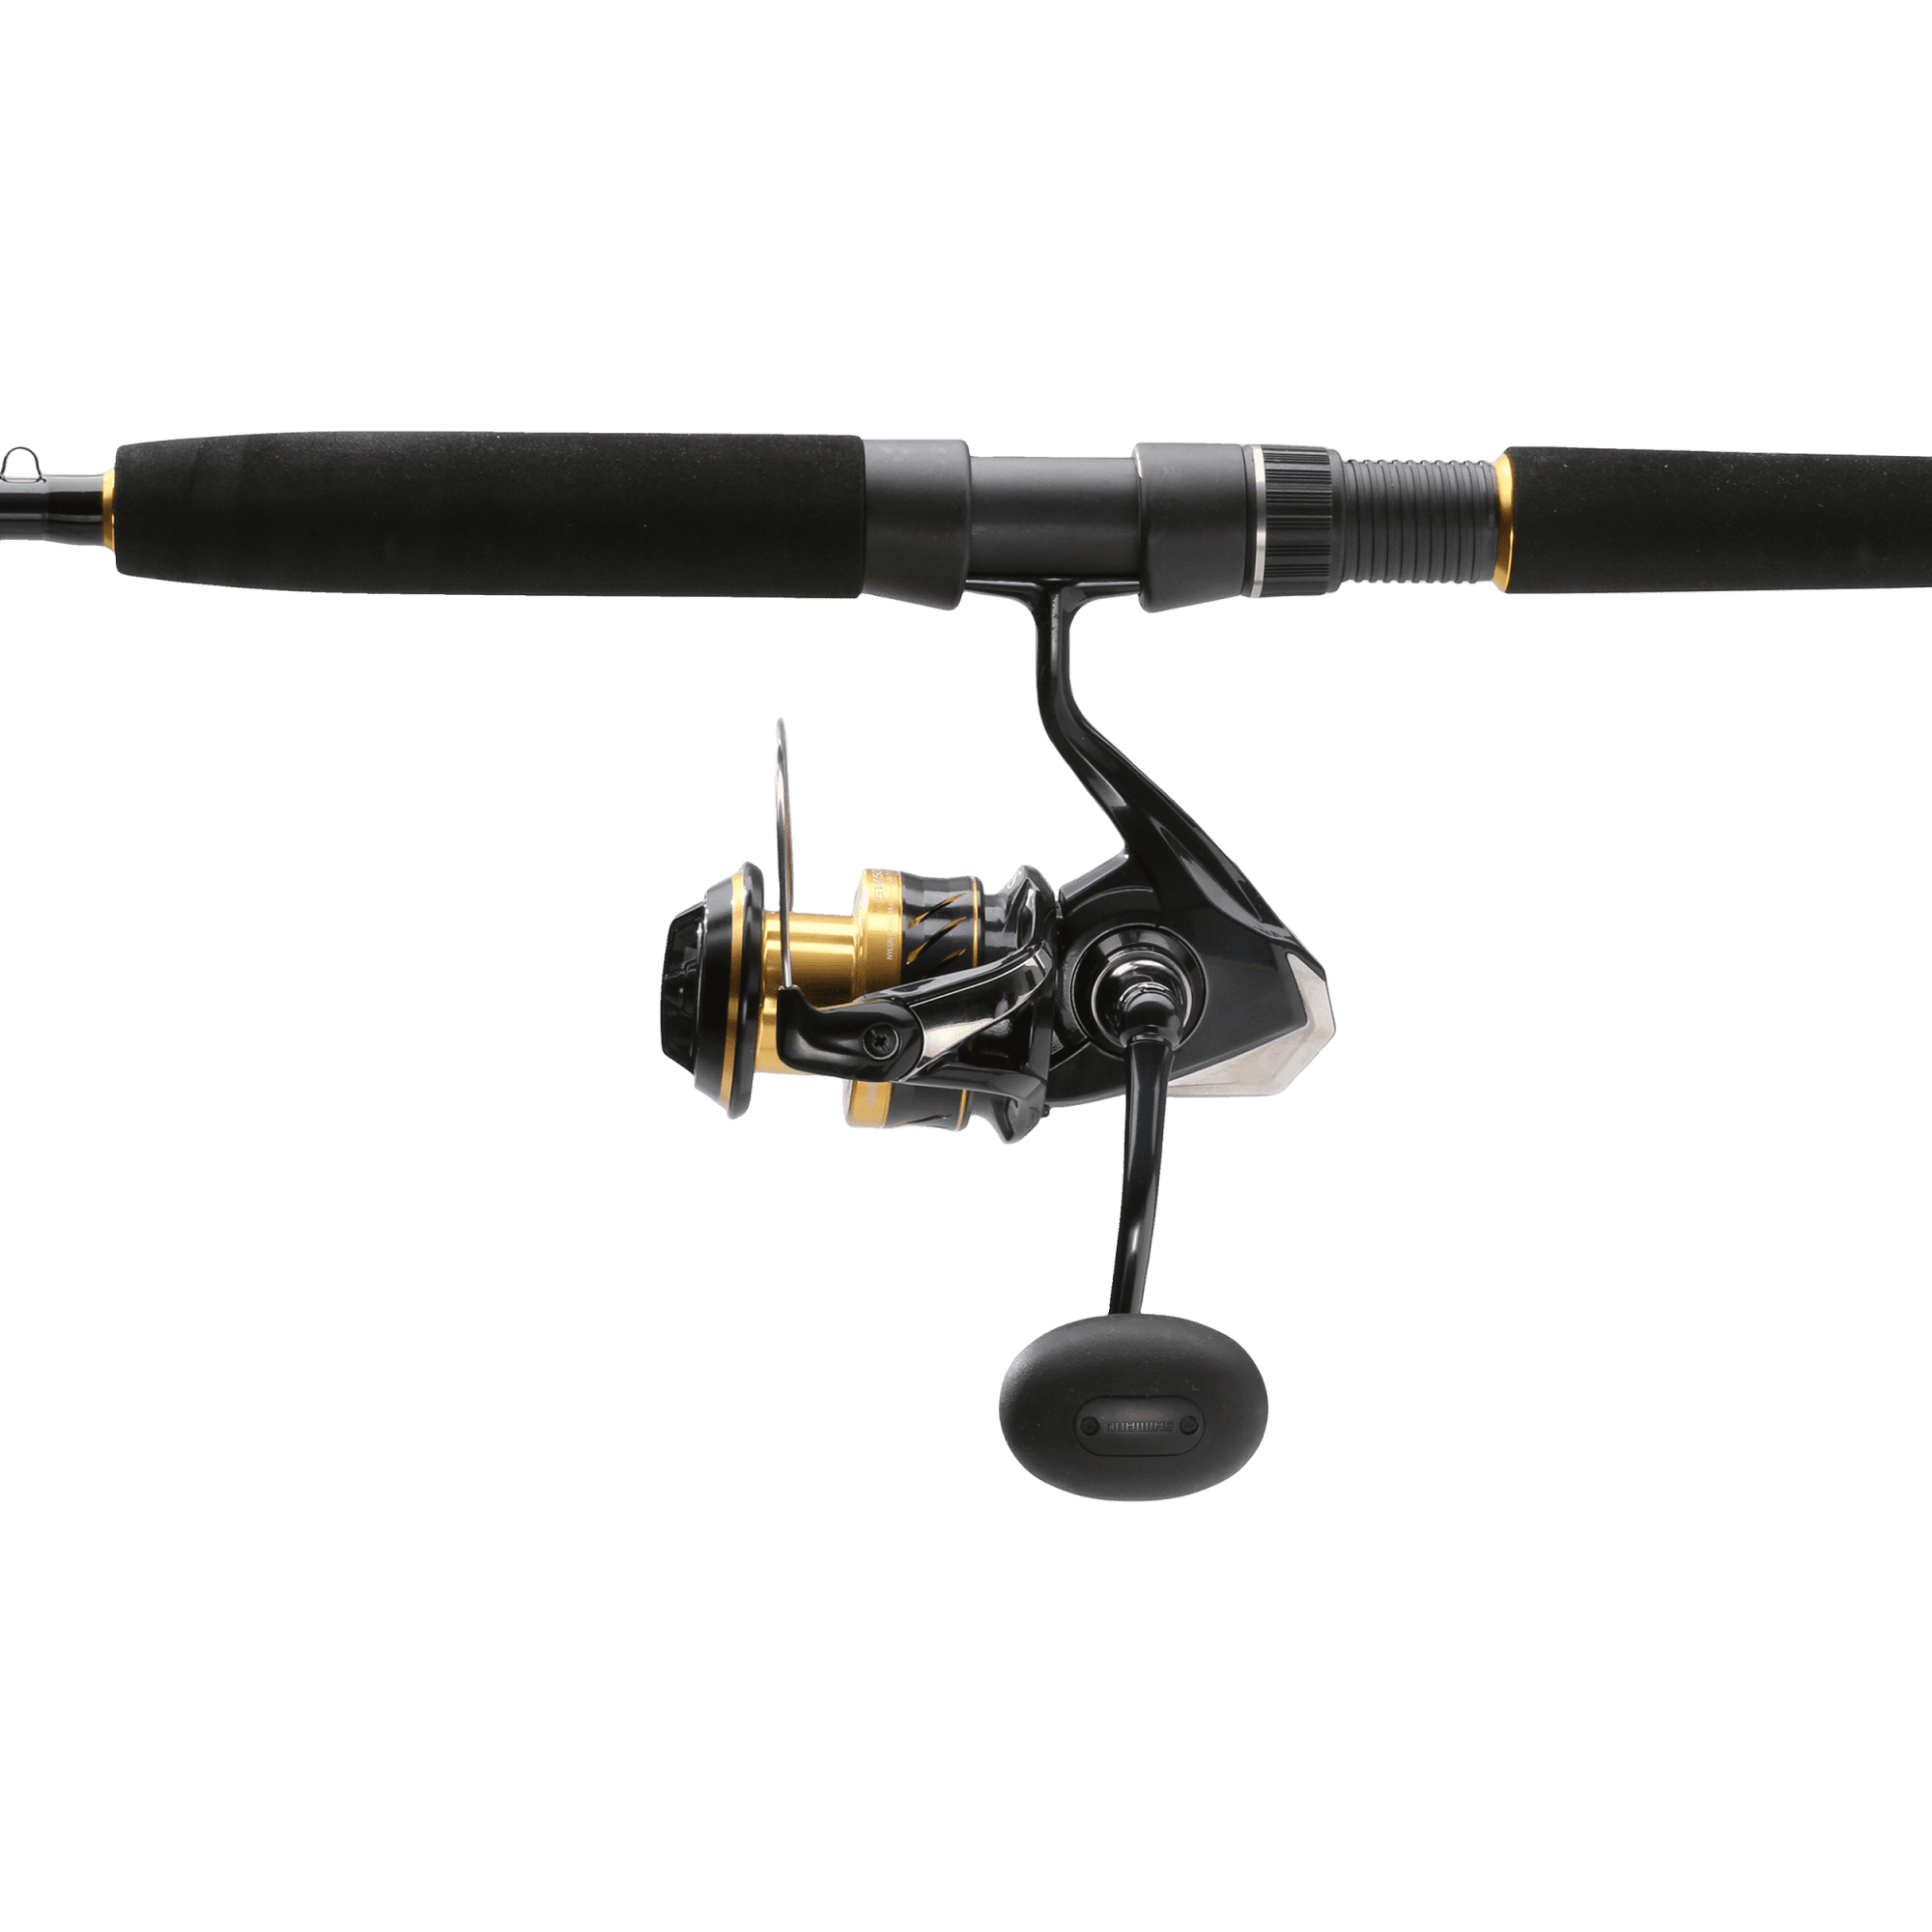 Shimano Medium Power Fishing Rod & Reel Combos for sale